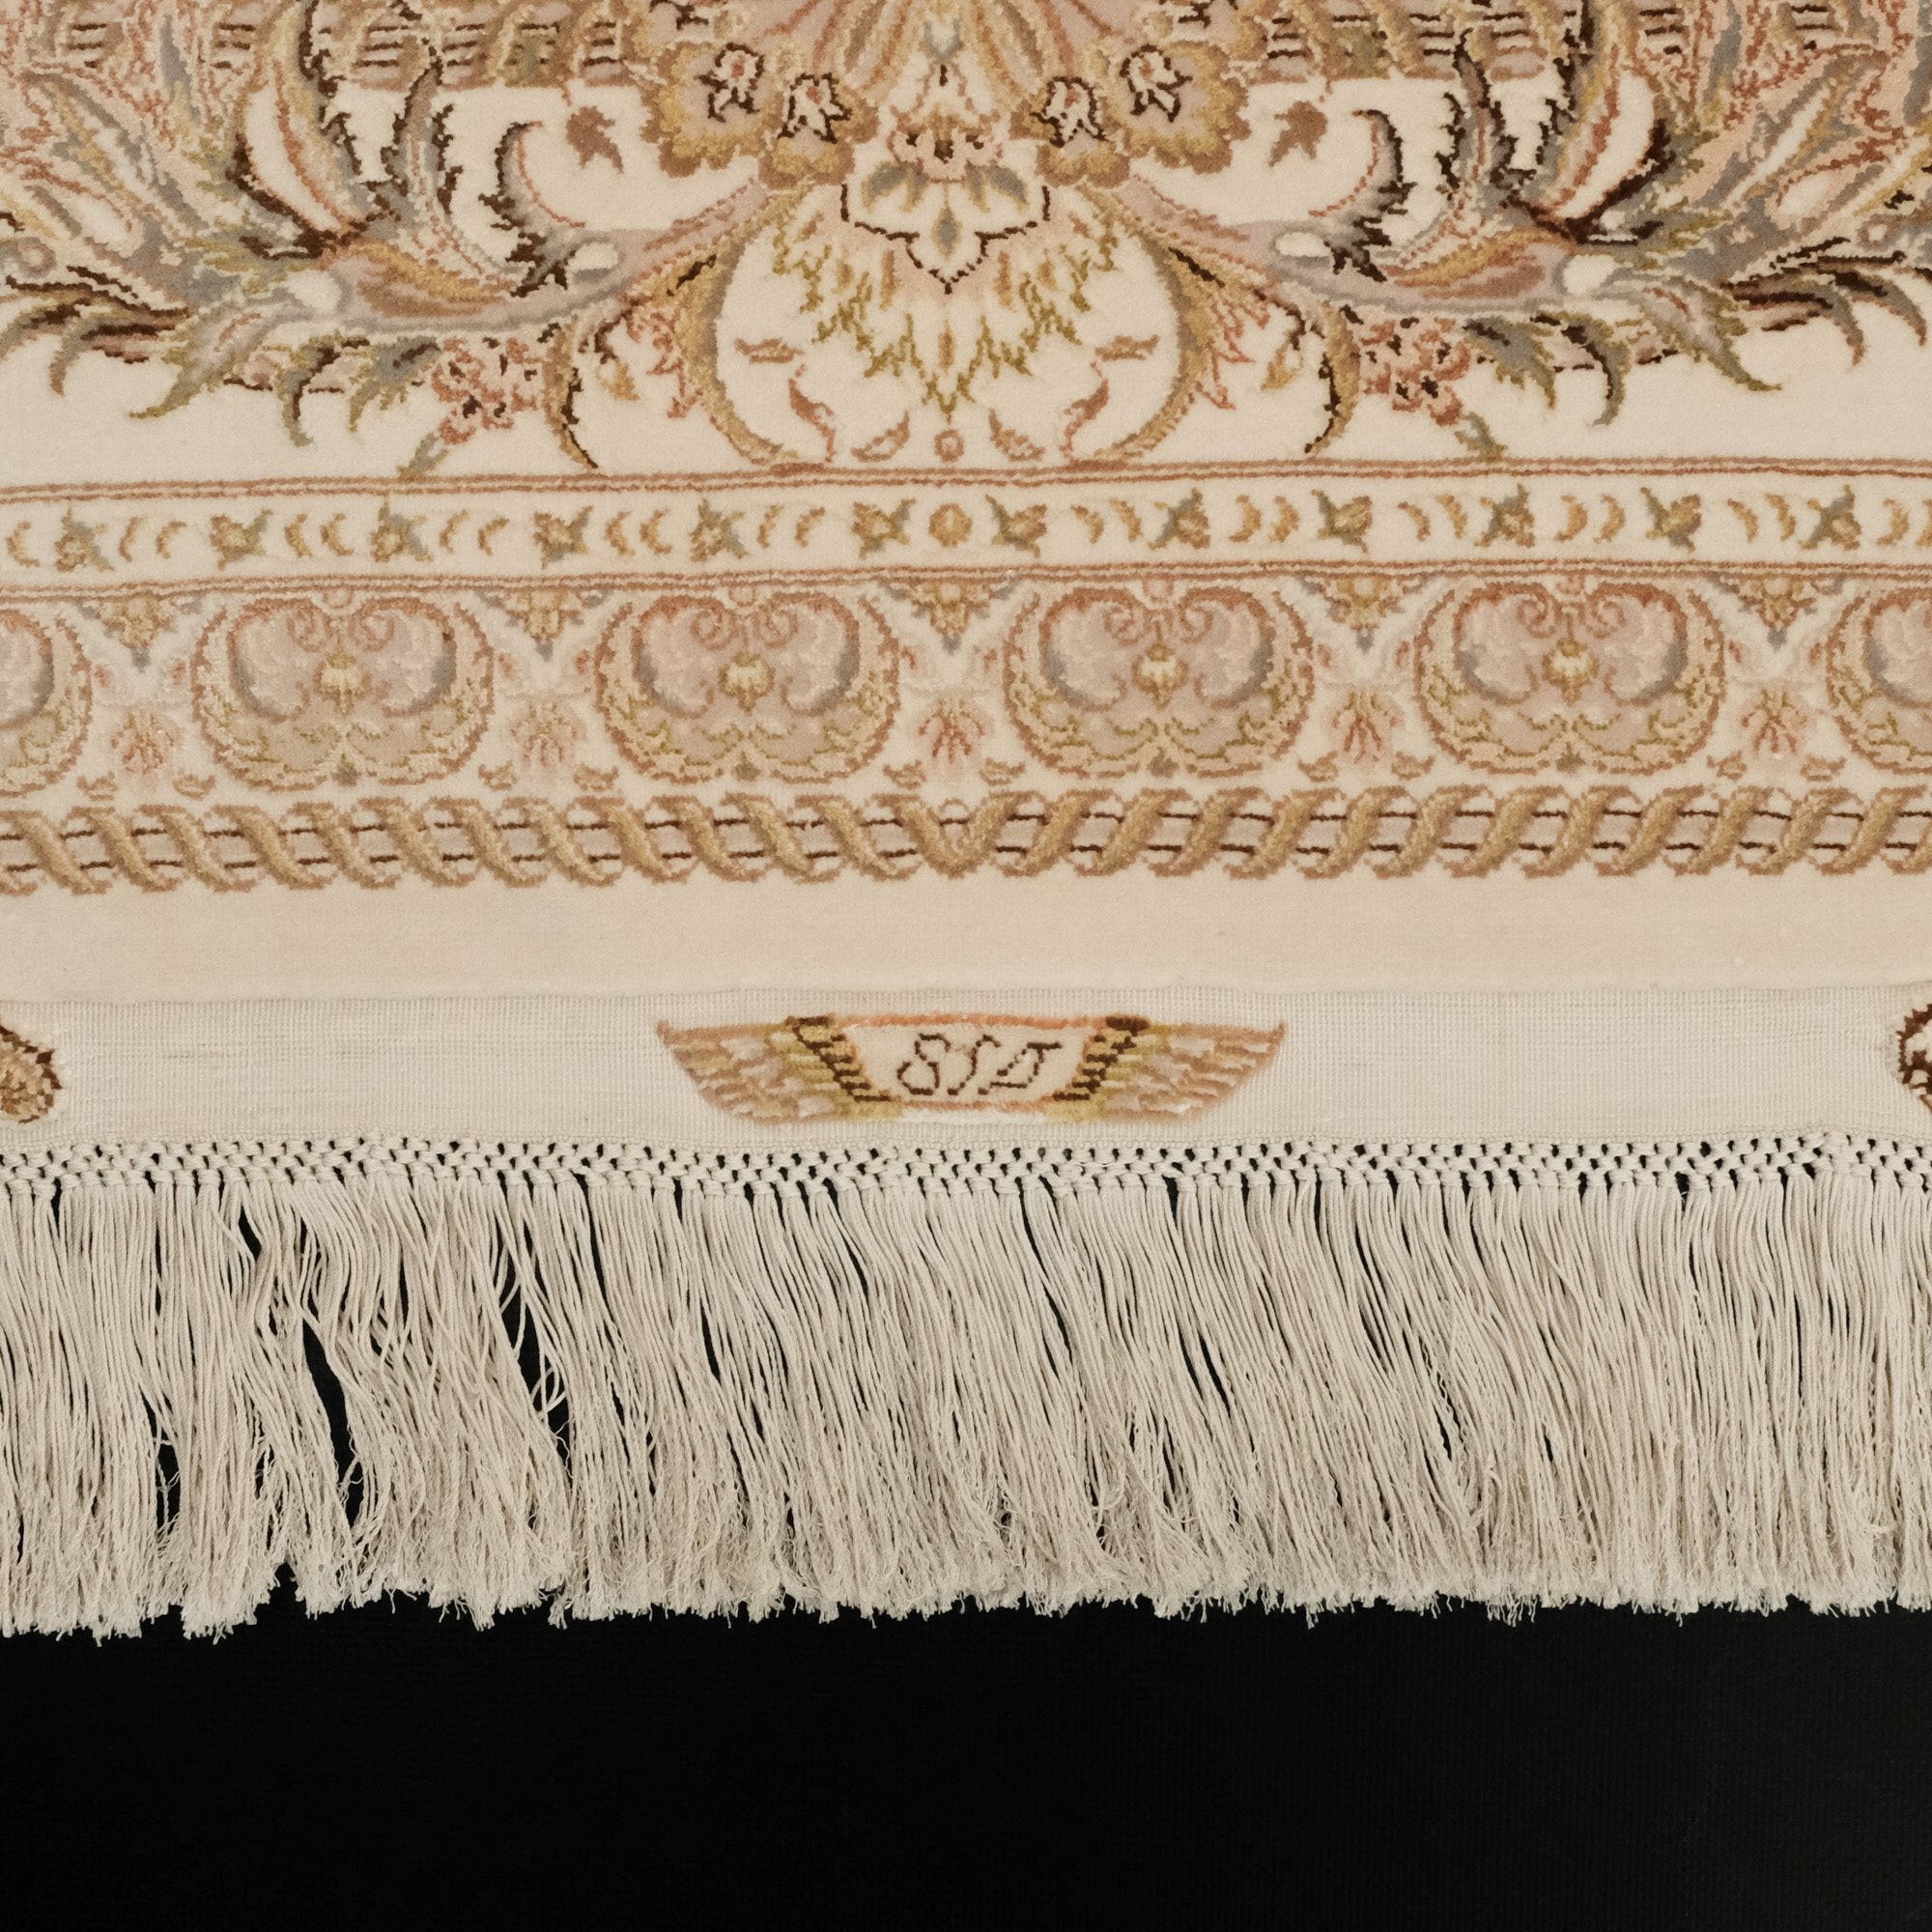 Zâde Series Floral Patterned Silk Hand-Woven Cream Carpet